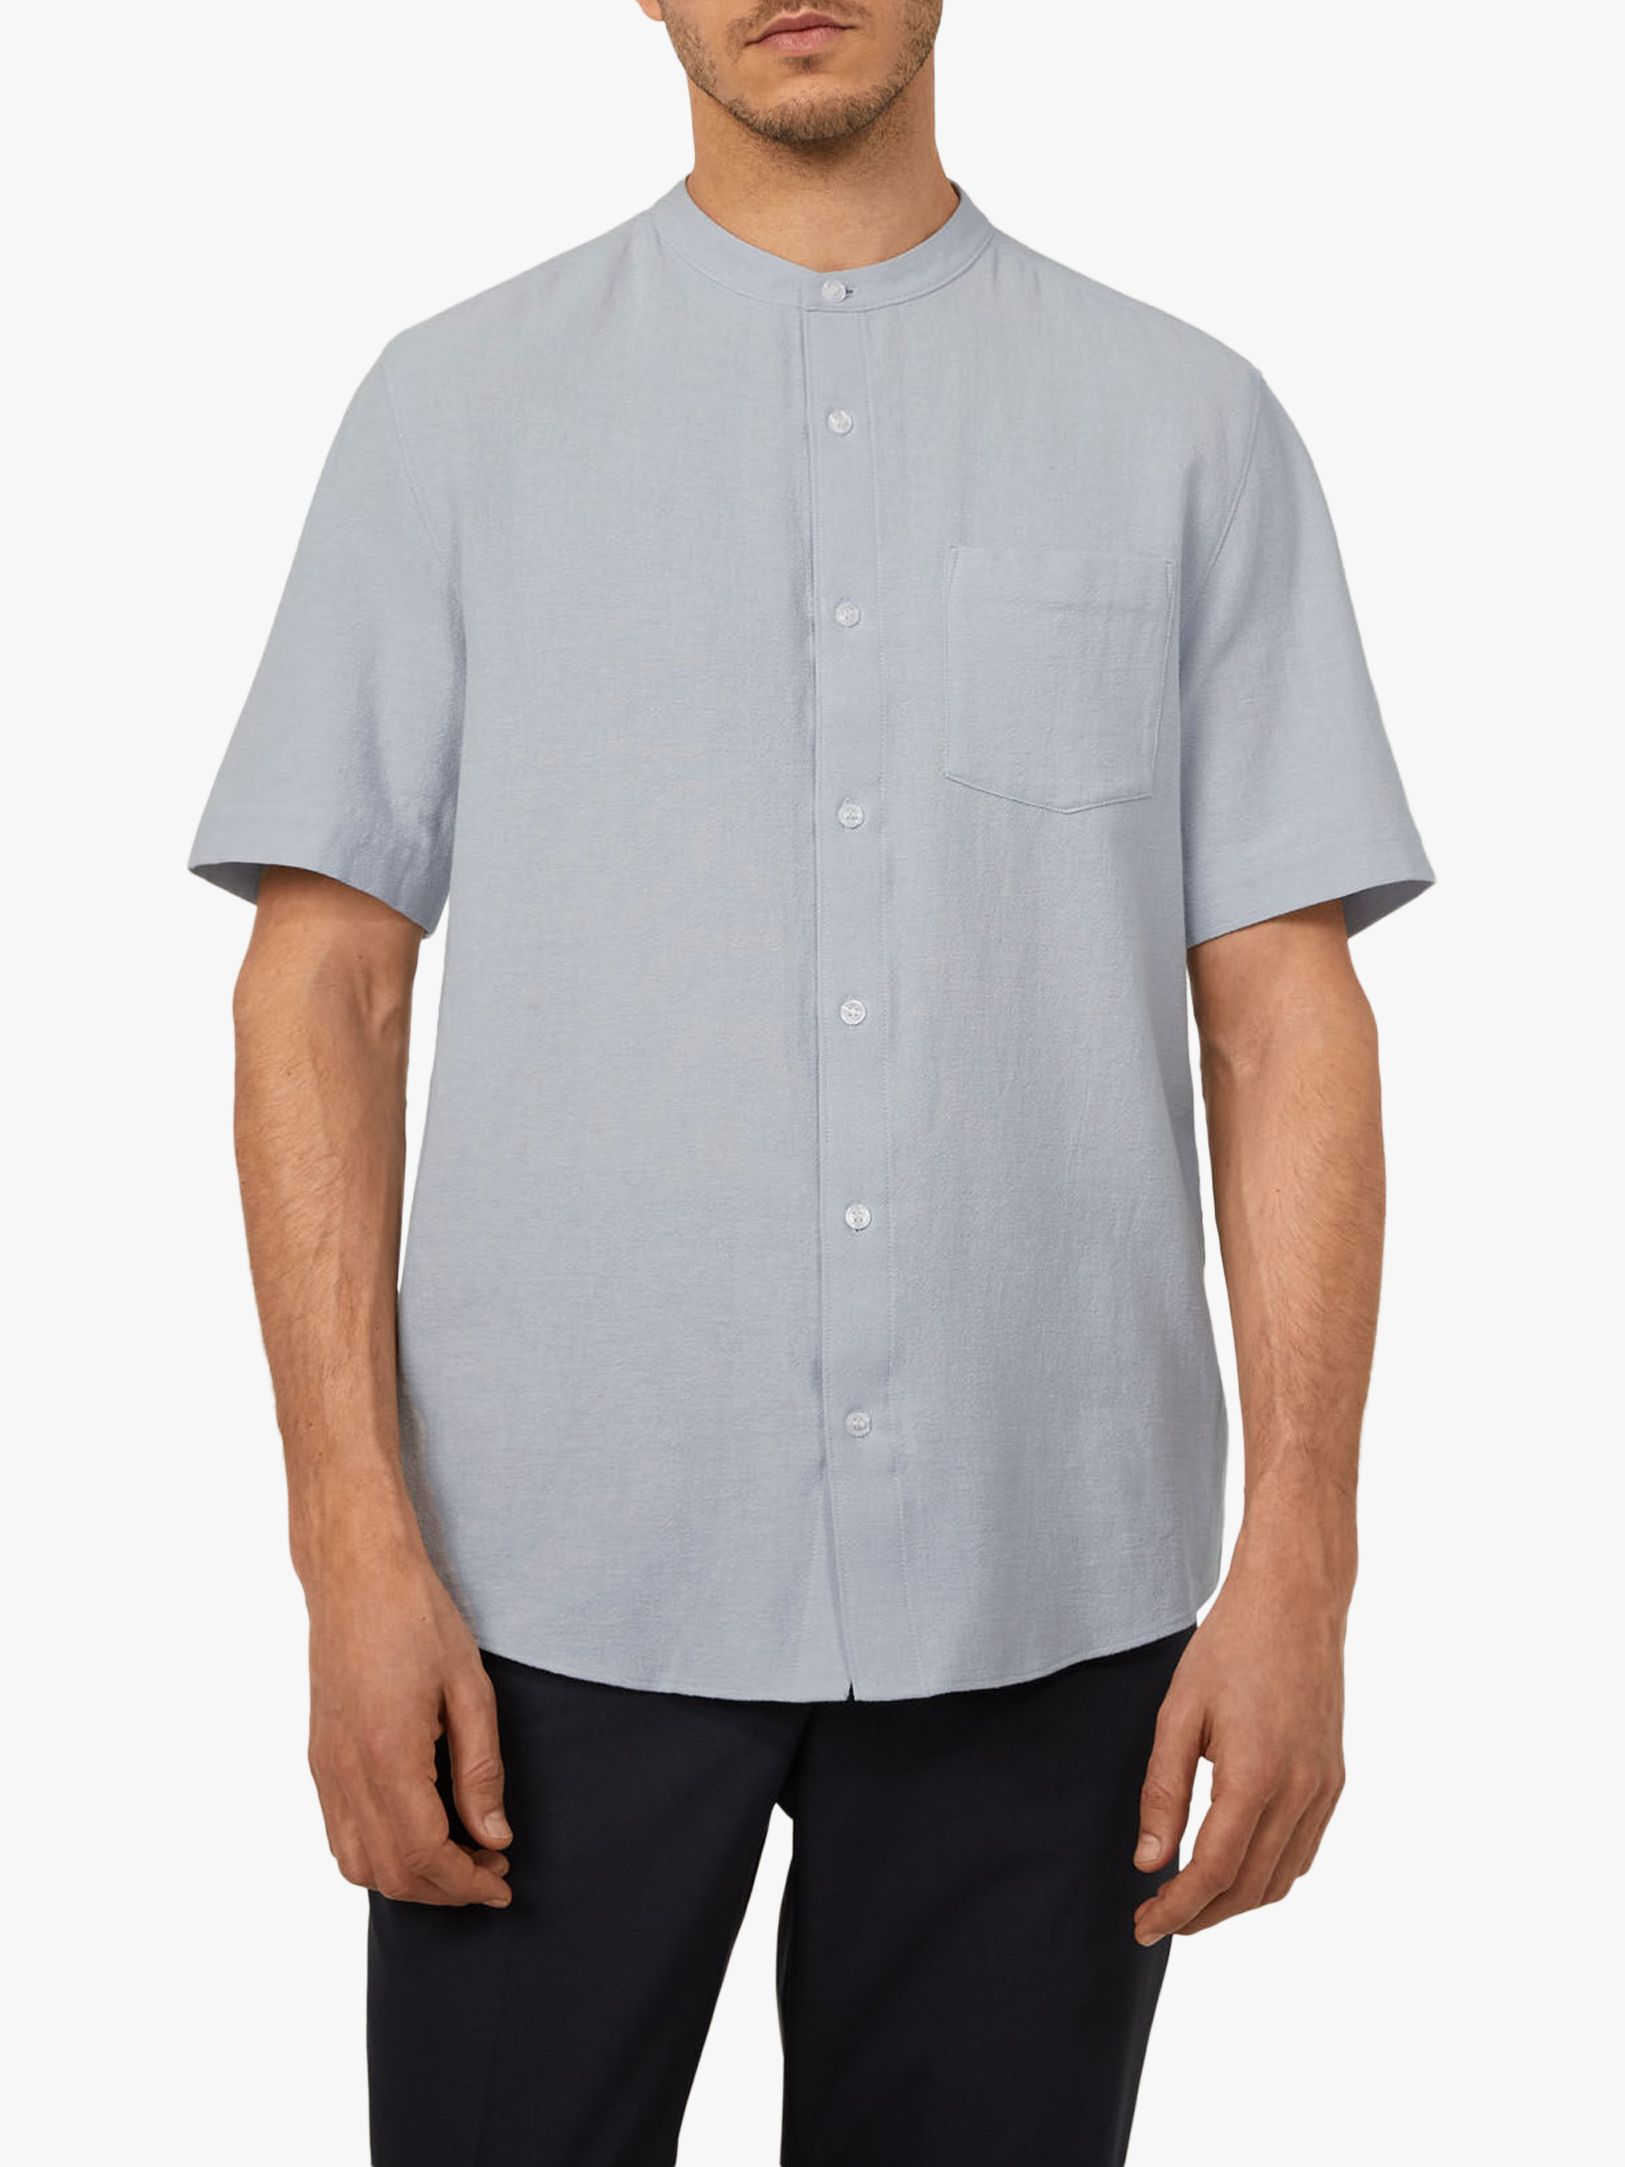 Warehouse Organic Cotton Grandad Collar Shirt, Light Blue, S